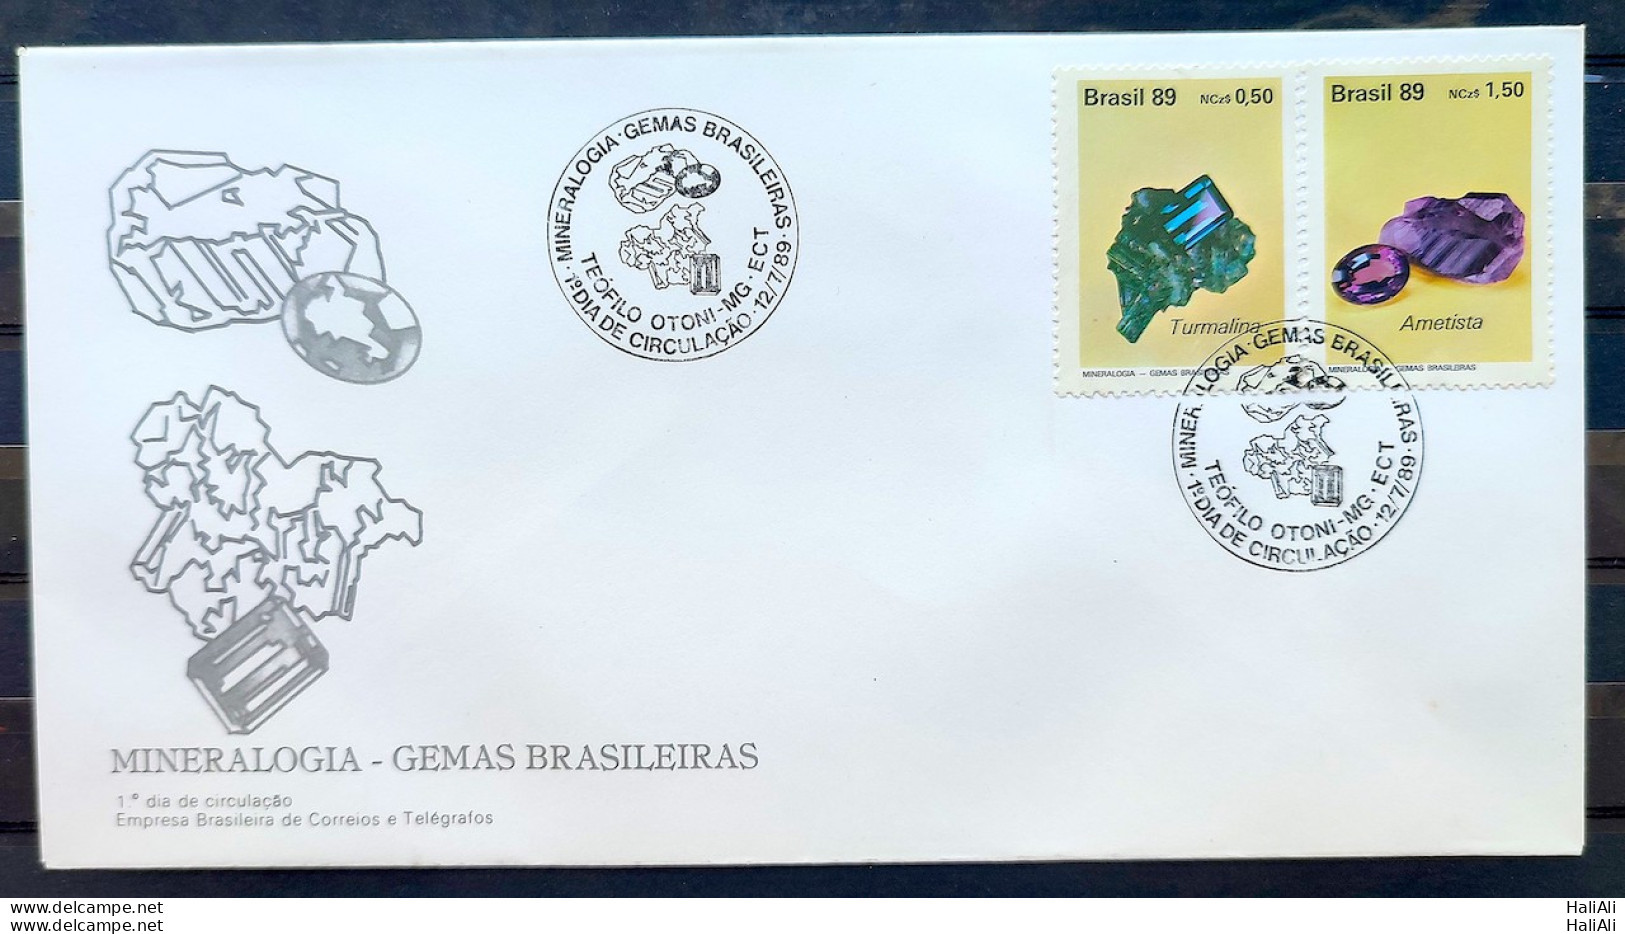 Brazil Envelope FDC 474 1989 Mineralogy Precious Stones Amethyst Tourmaline CBC MG 05 - FDC